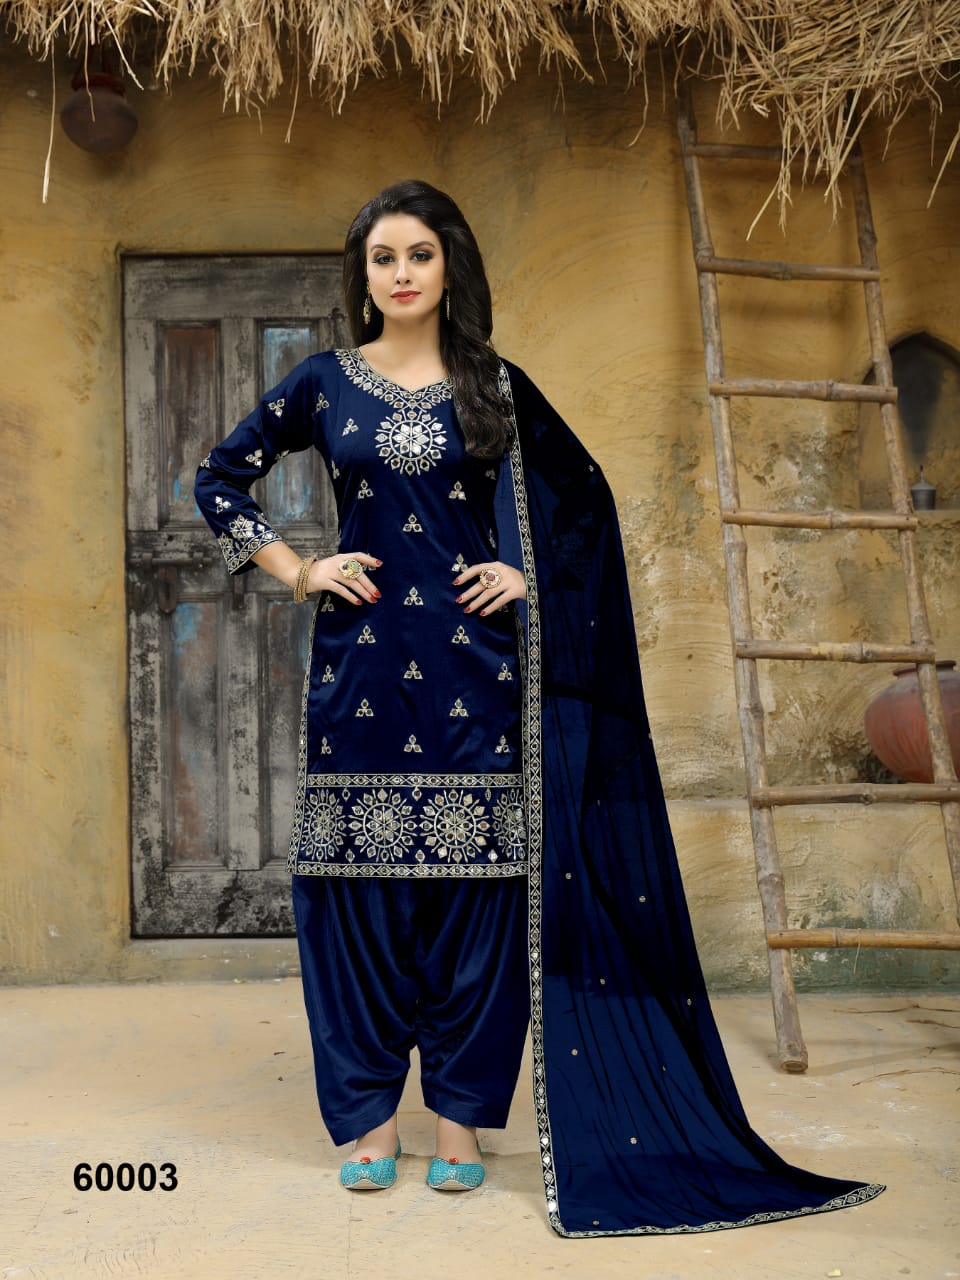 Aanaya presents 60000 semi casual wear salwar kameez concept